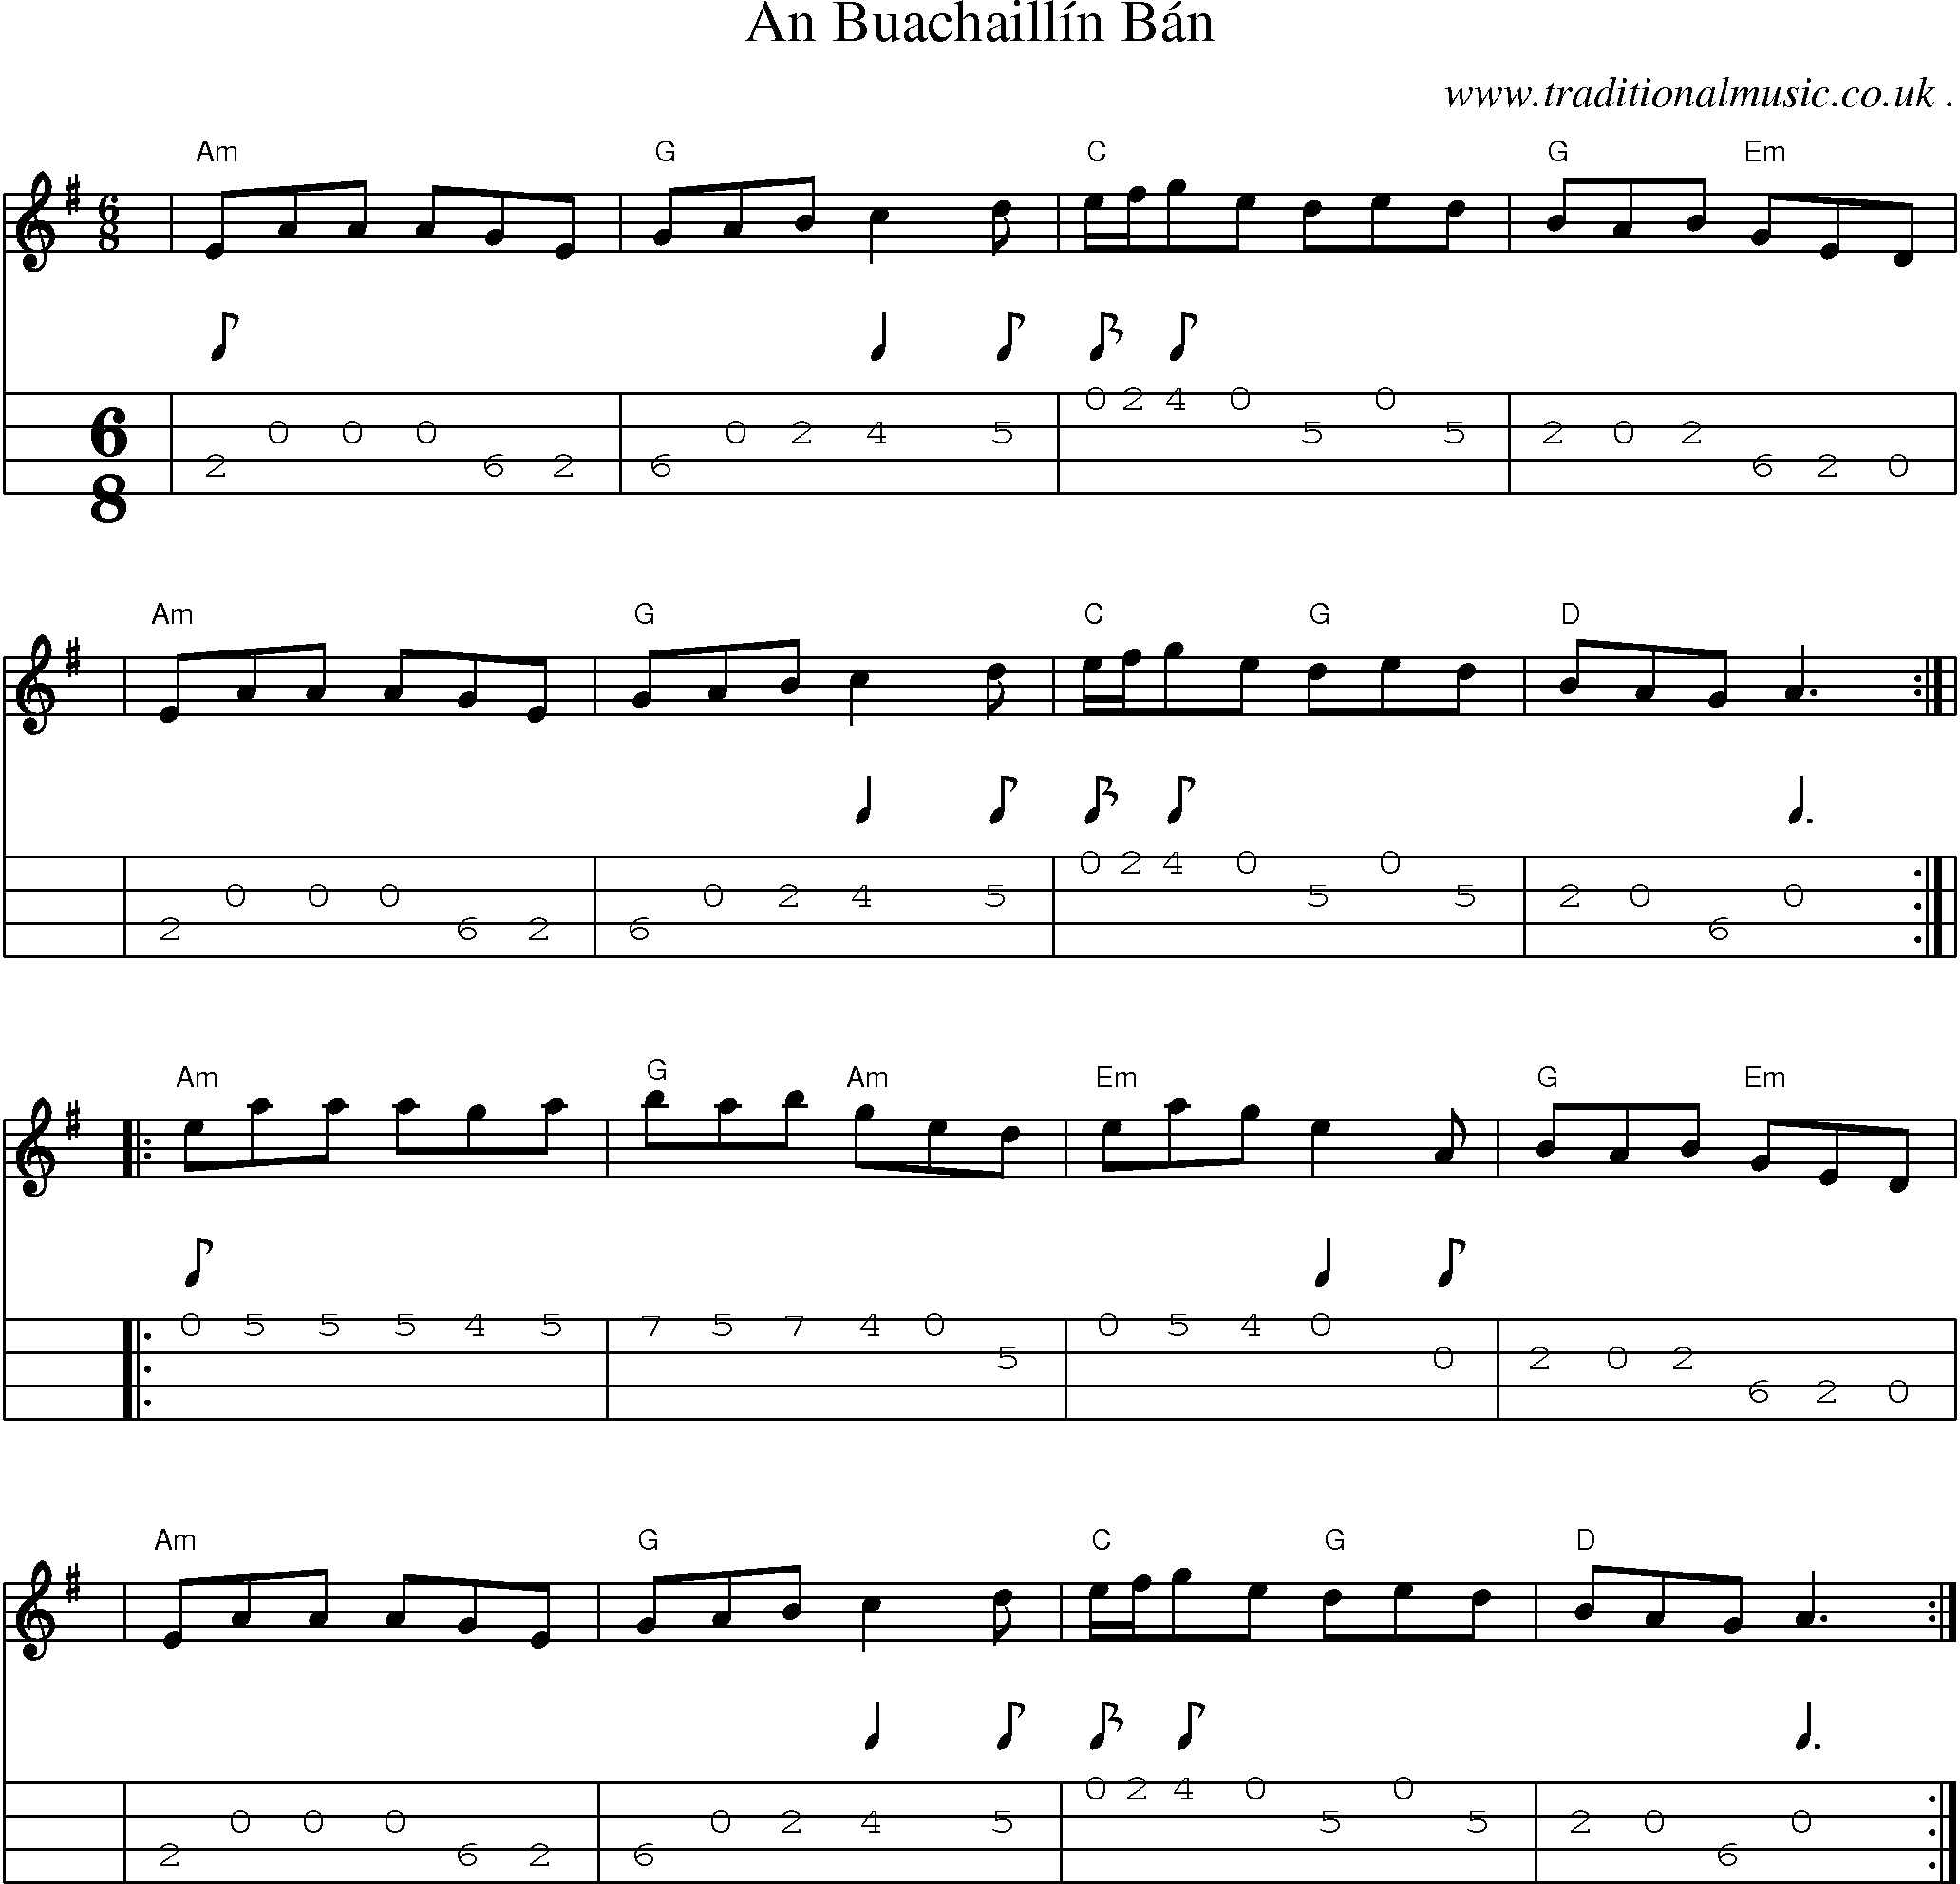 Sheet-music  score, Chords and Mandolin Tabs for An Buachaillin Ban